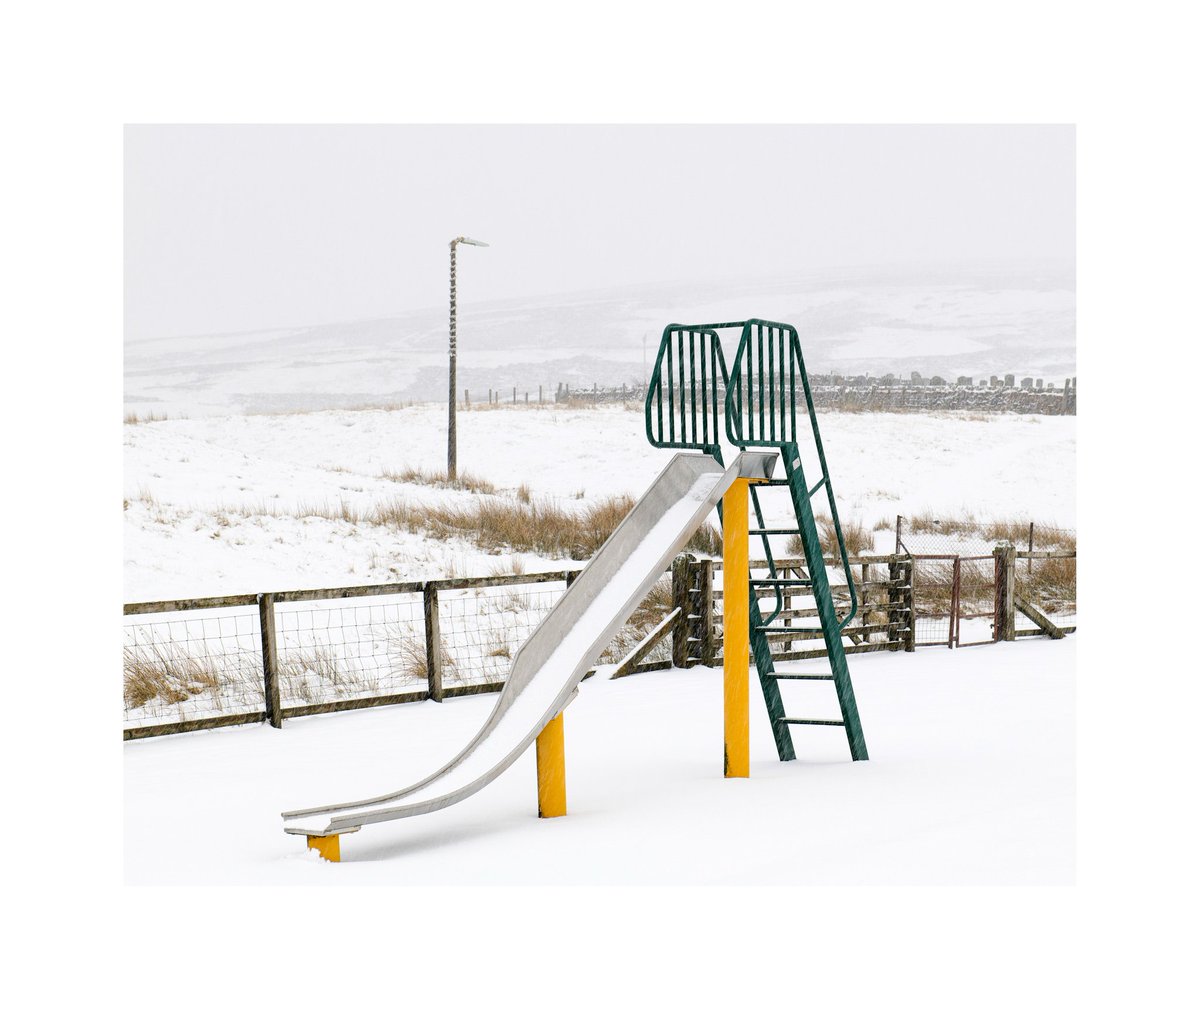 'Winter Playground' #DumfriesGalloway #Scotland #sharemondays2023